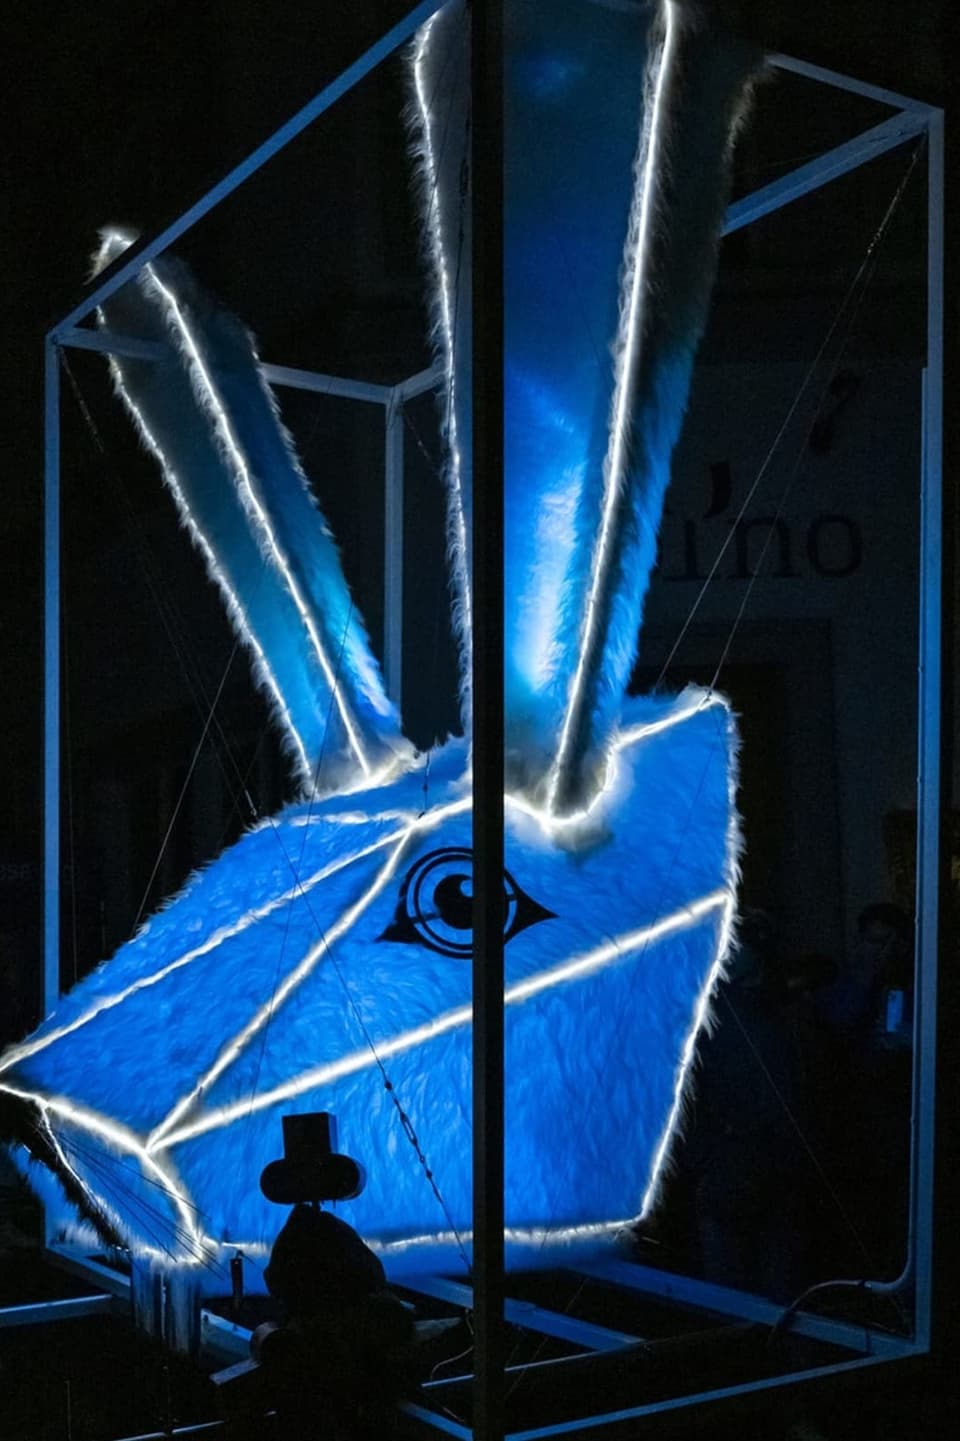 A futuristic, illuminated subject of a rabbit in blue.